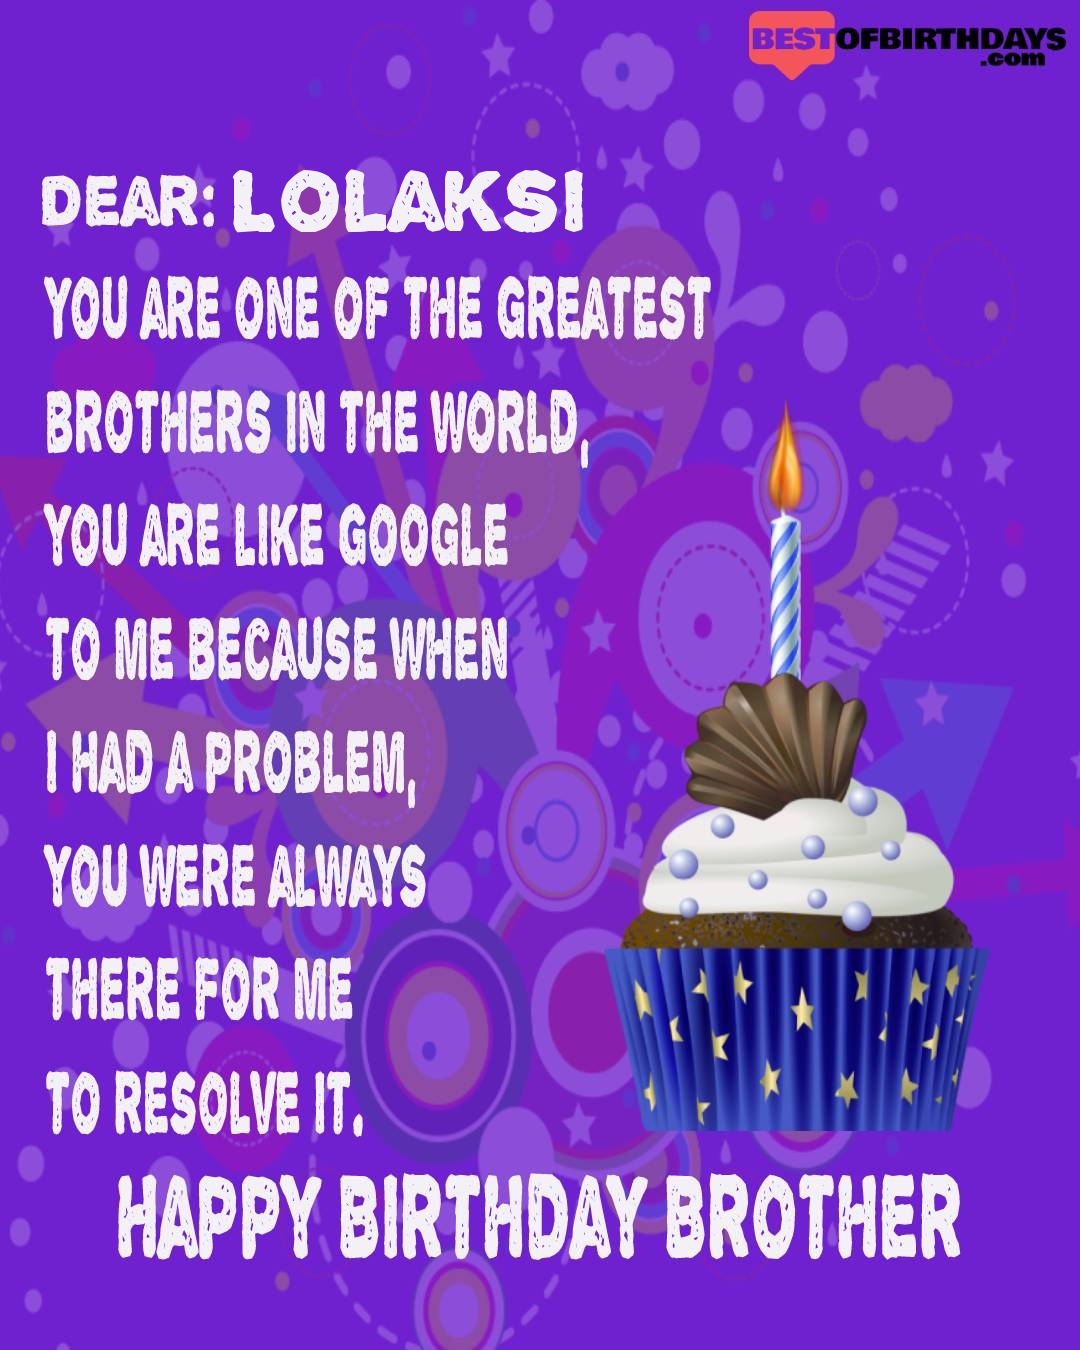 Happy birthday lolaksi bhai brother bro